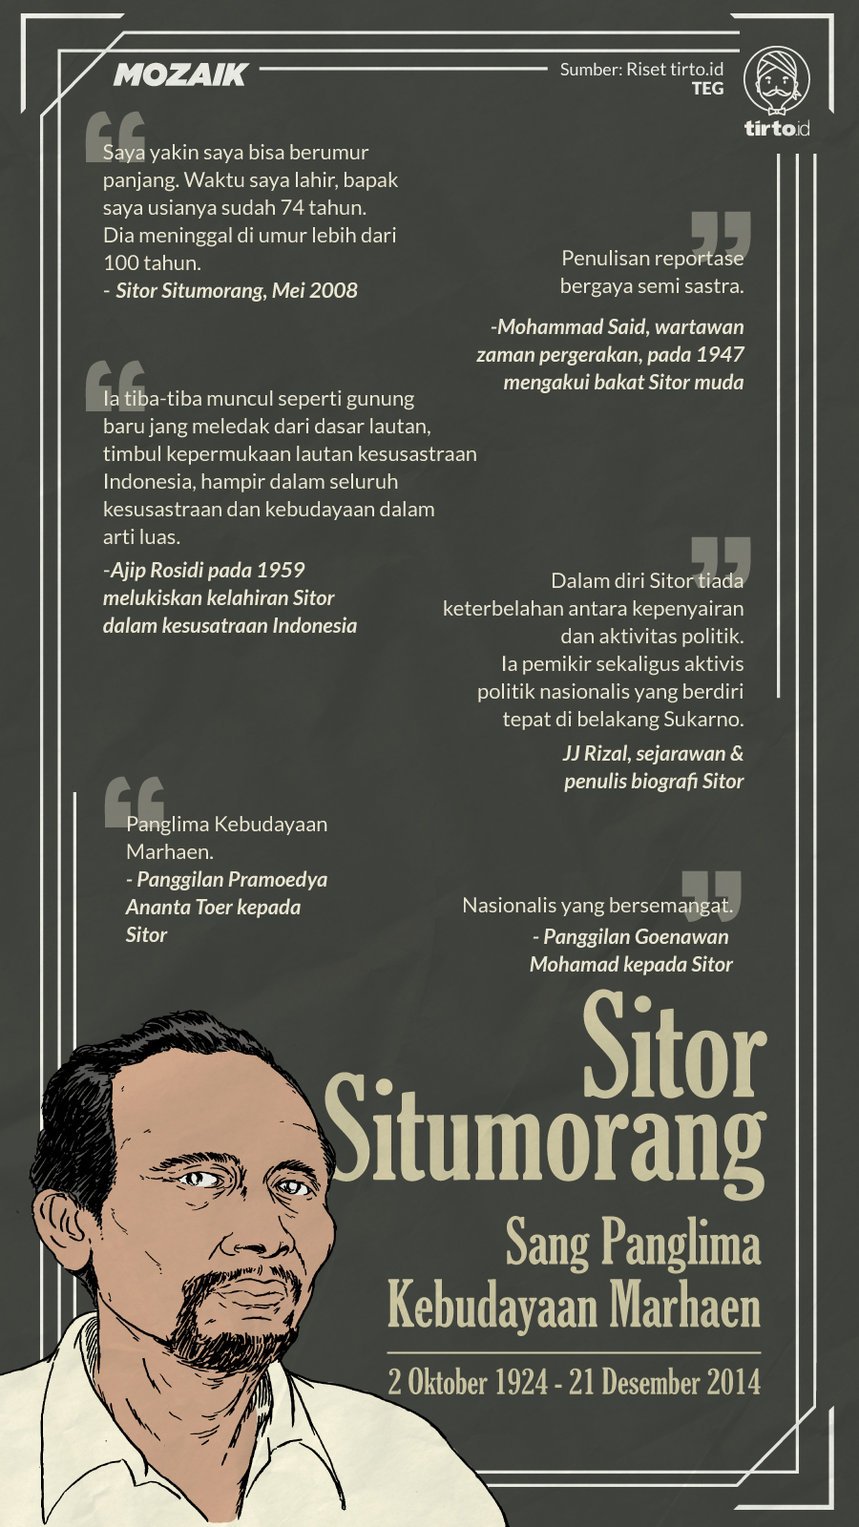 Infografik Mozaik Sitor Situmorang